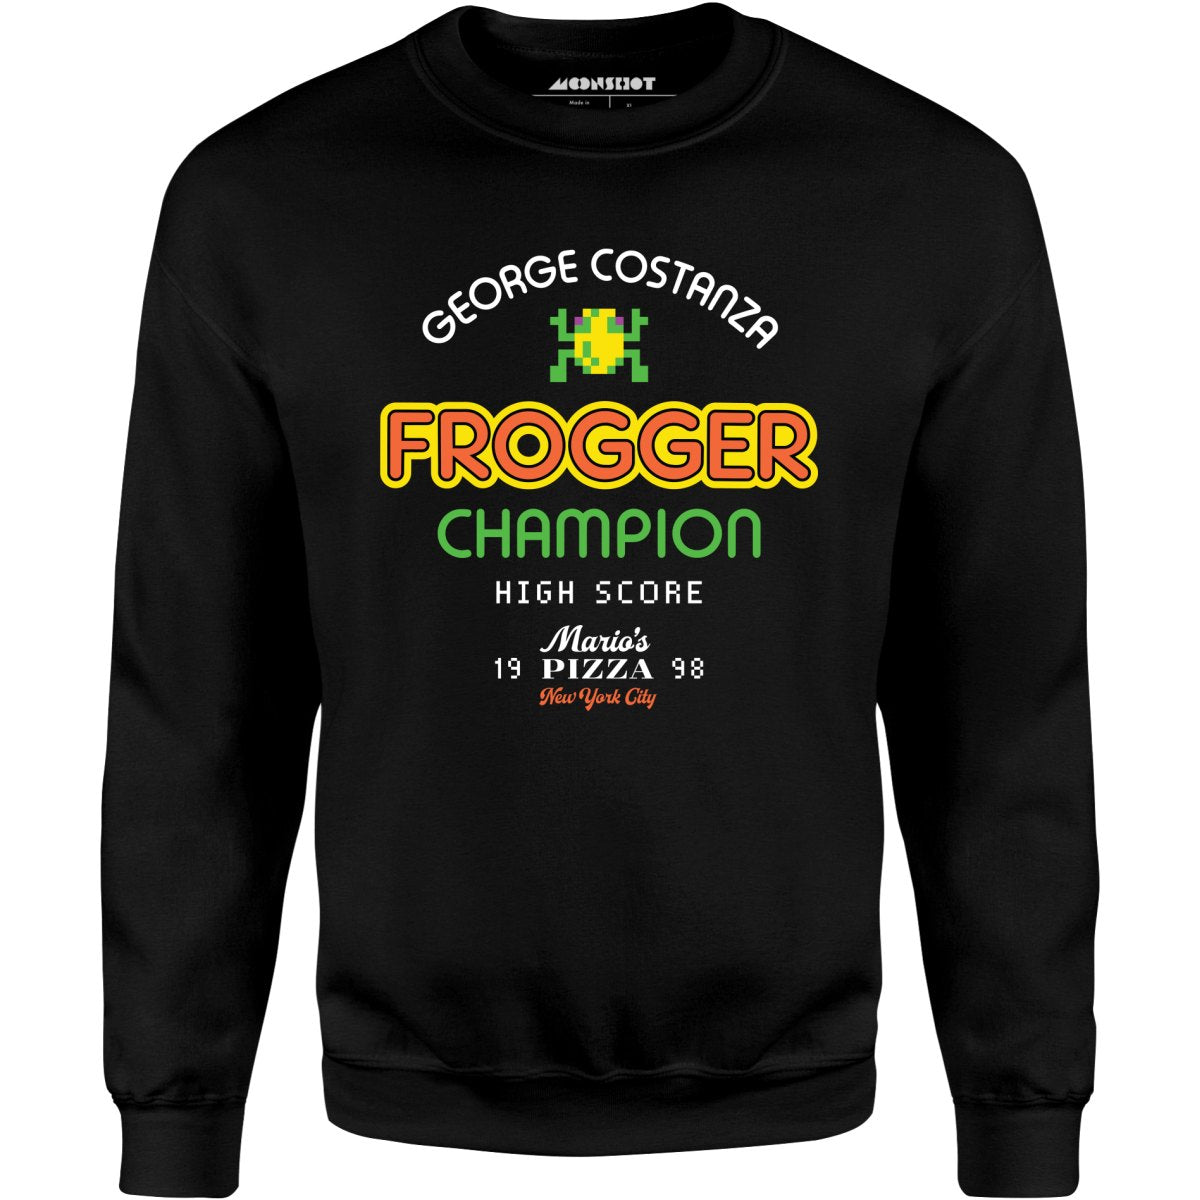 George Costanza Frogger Champion - Mario's Pizza - Unisex Sweatshirt